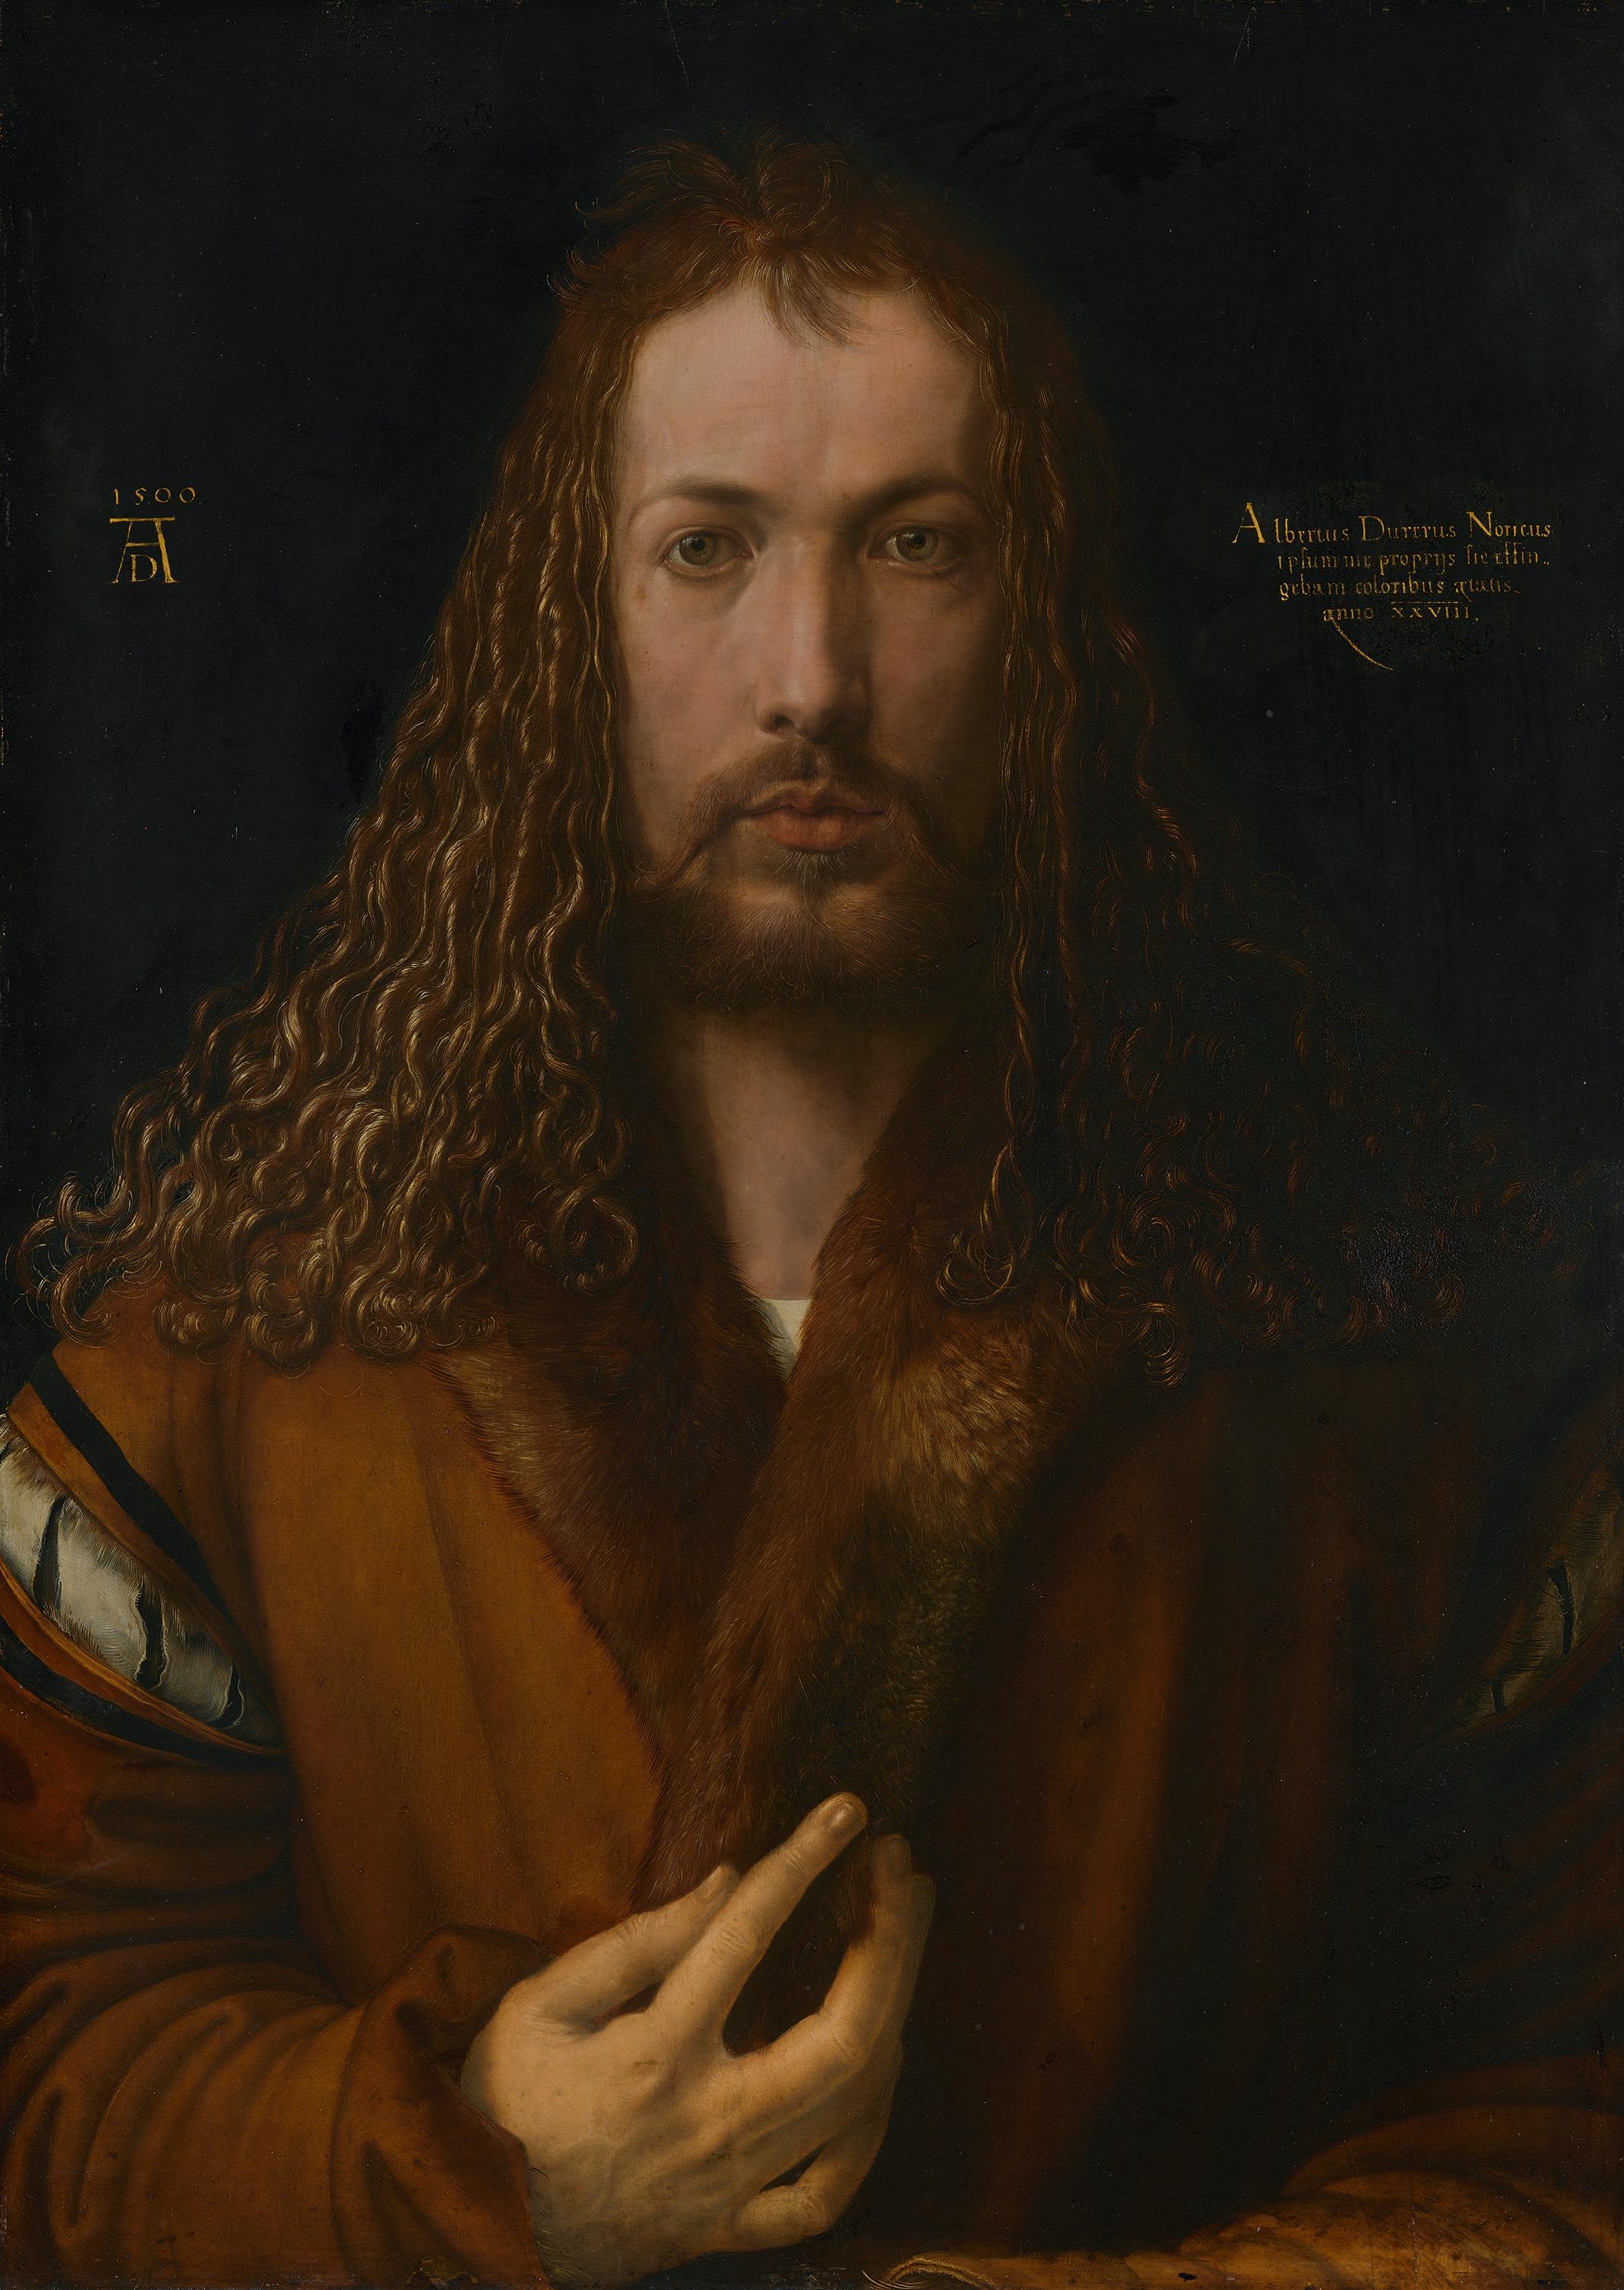 Self-Portrait with Fur-Trimmed Robe by Albrecht Dürer - 1500 - 67.1 x 48.9 cm Alte Pinakothek